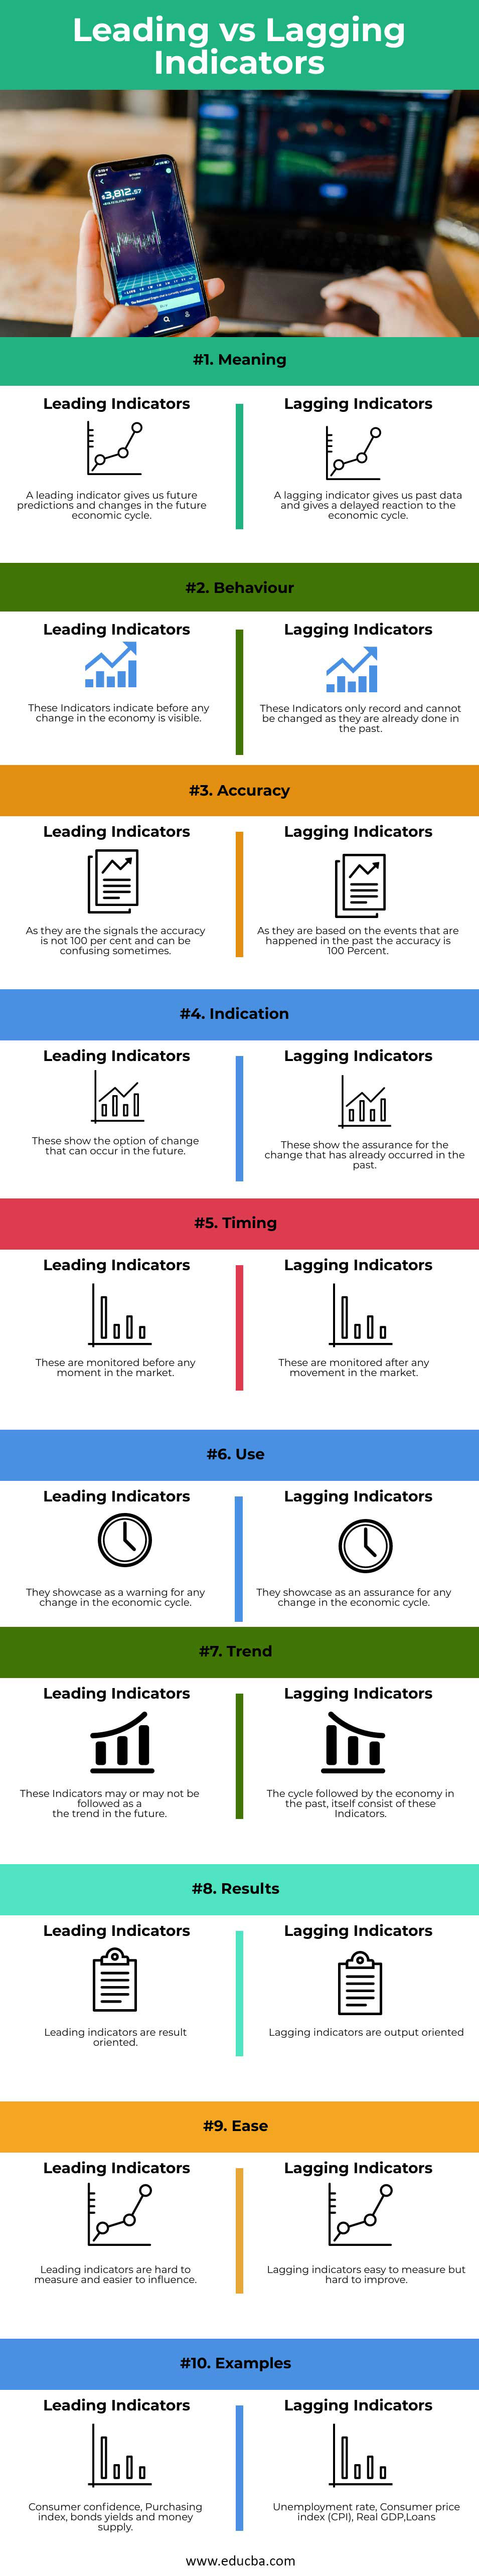 Leading-vs-Lagging-Indicators-info